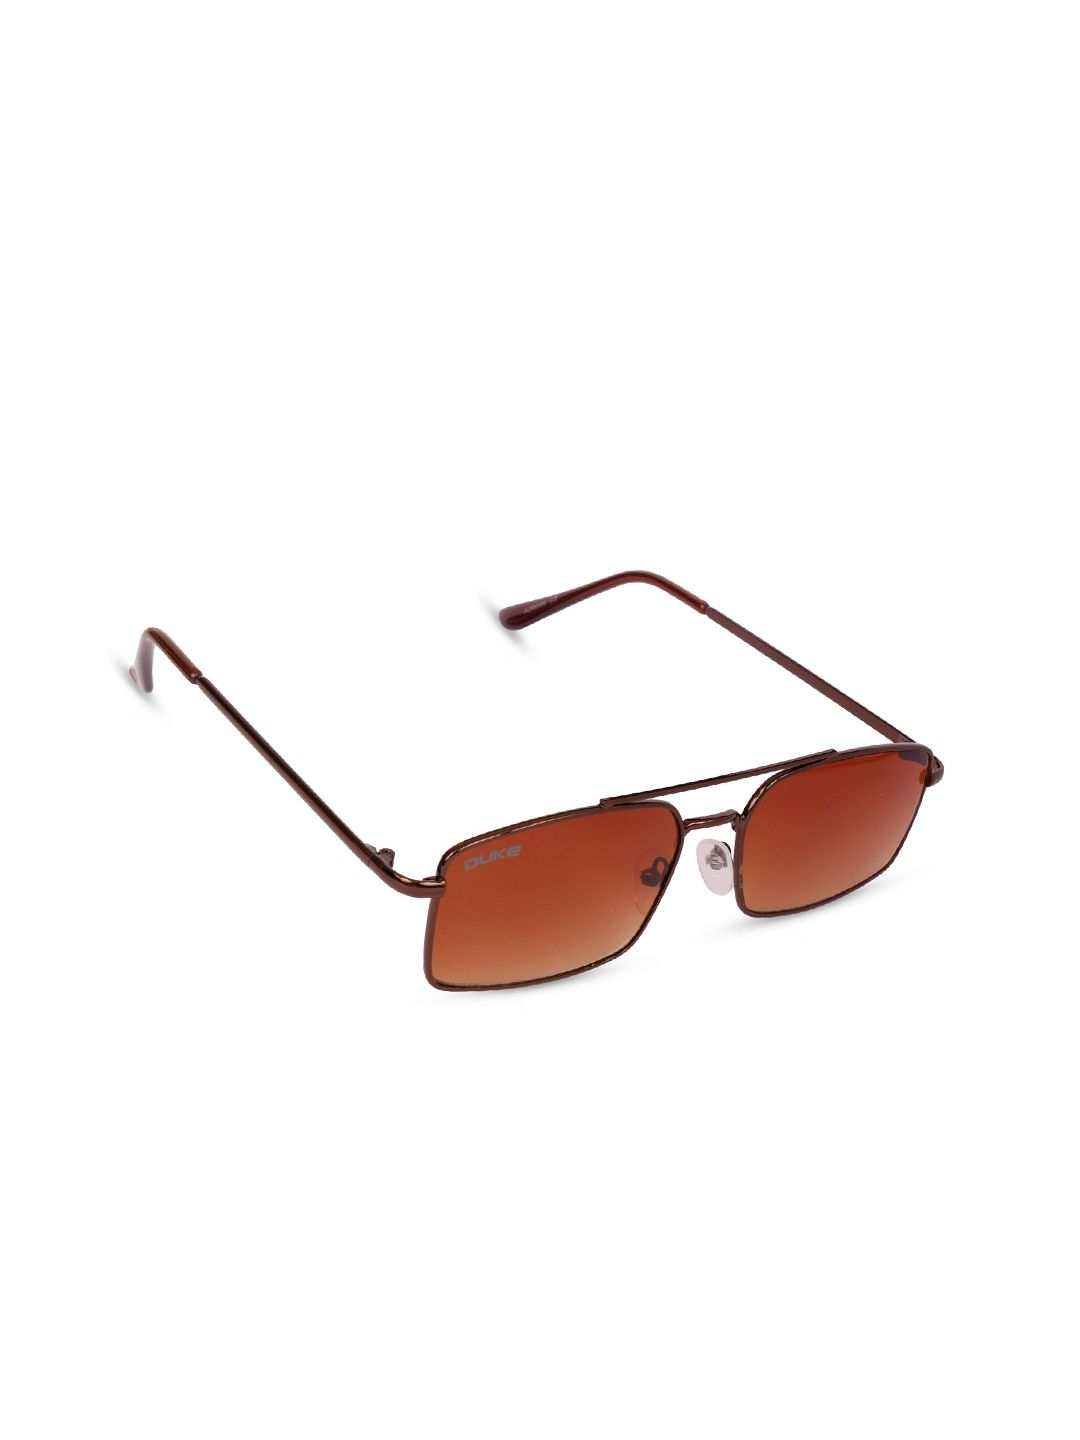 Duke Unisex Brown Lens & Brown Rectangle Sunglasses DUKE-A20066-C3 Price in India